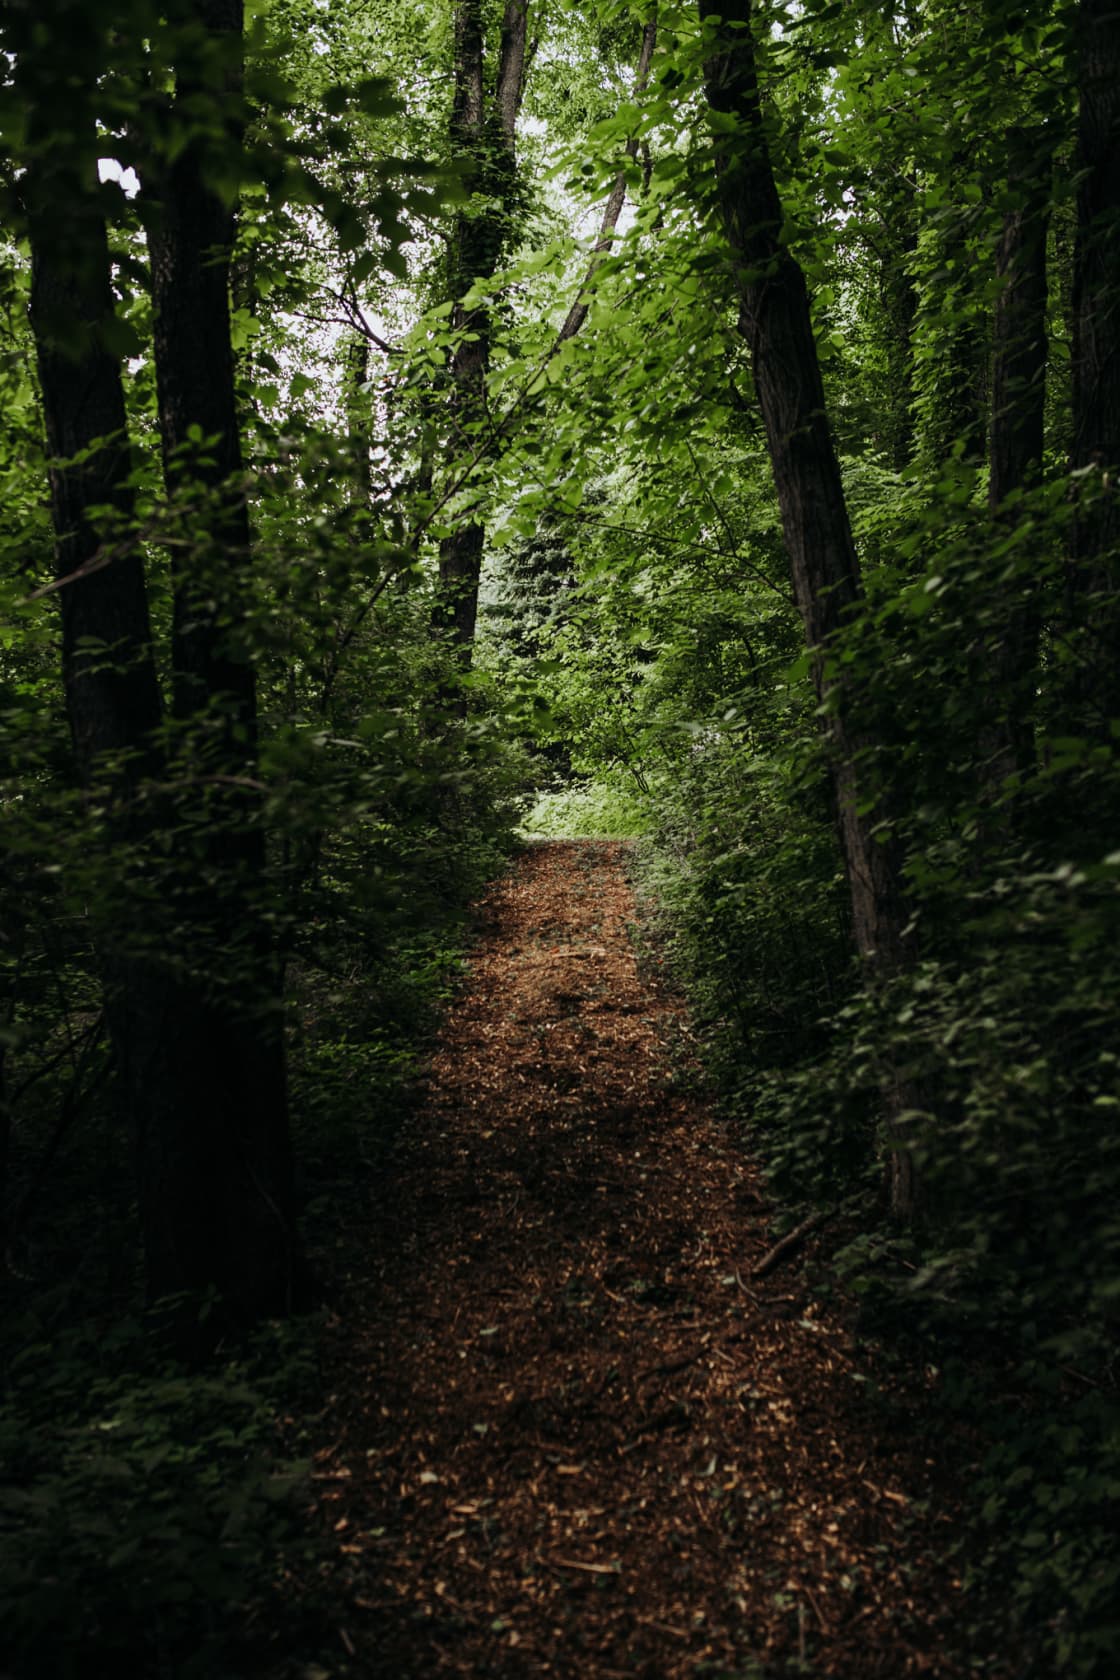 Trails around the forest